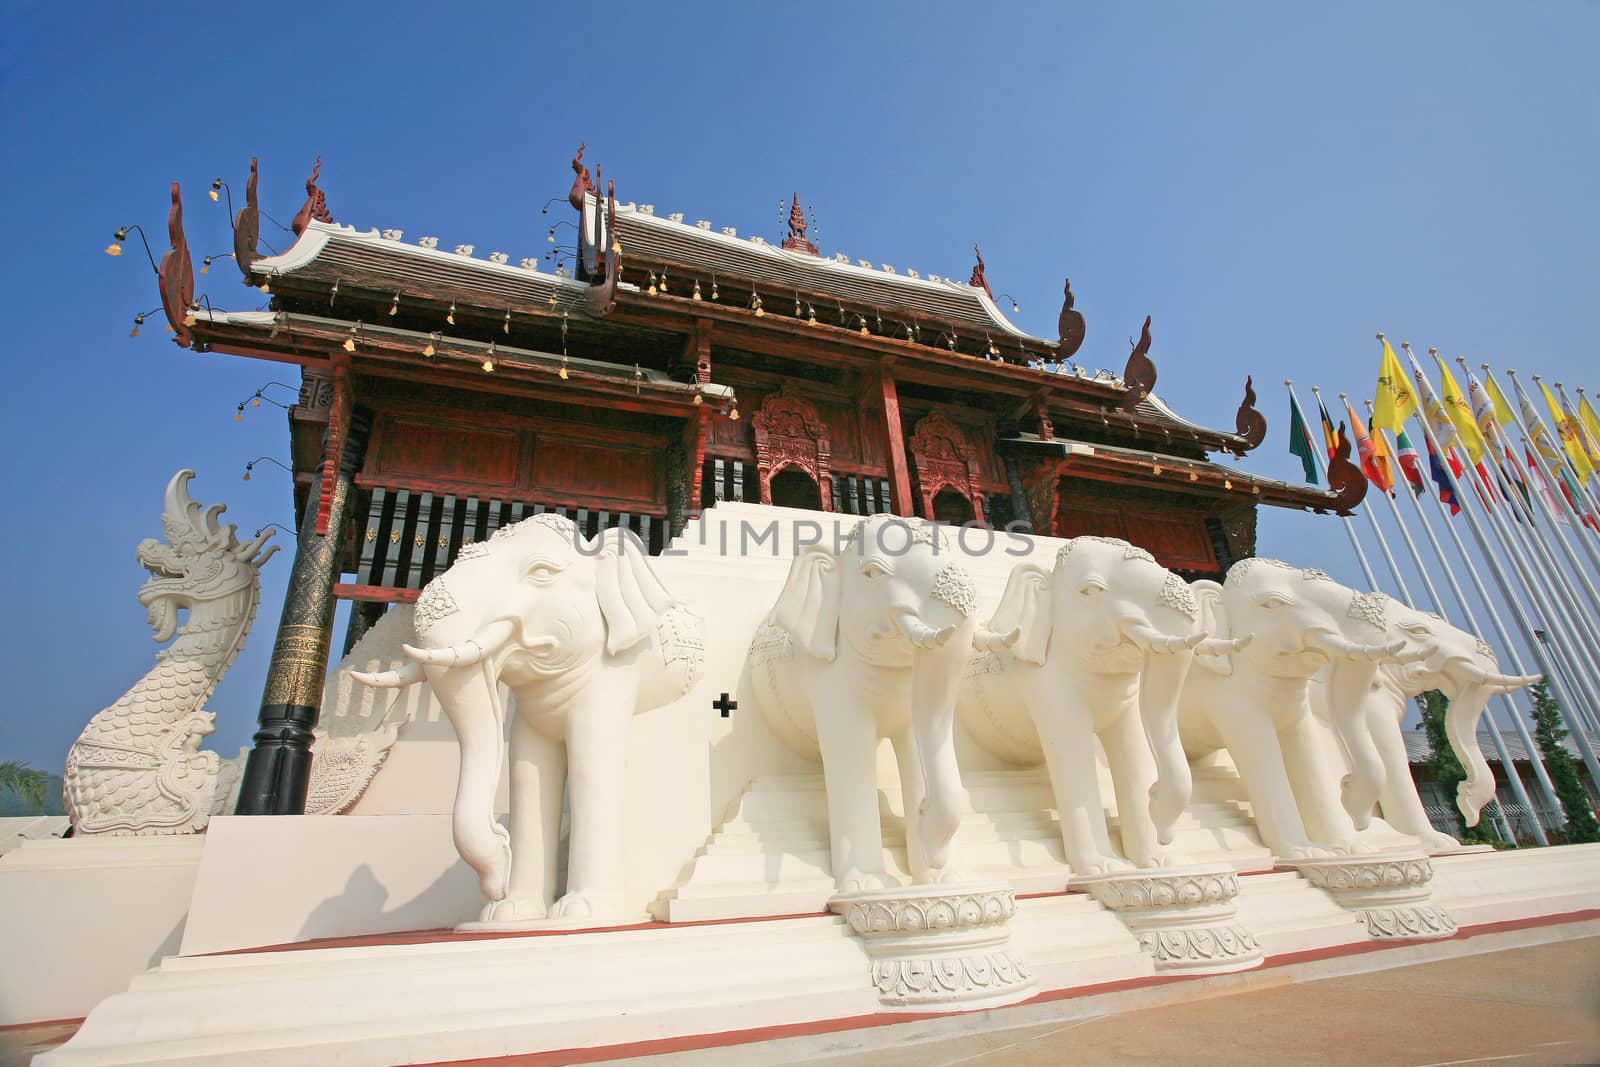 The white stucco elephant sculptur in Royal flora expo ,Chaingmai,Thai land.